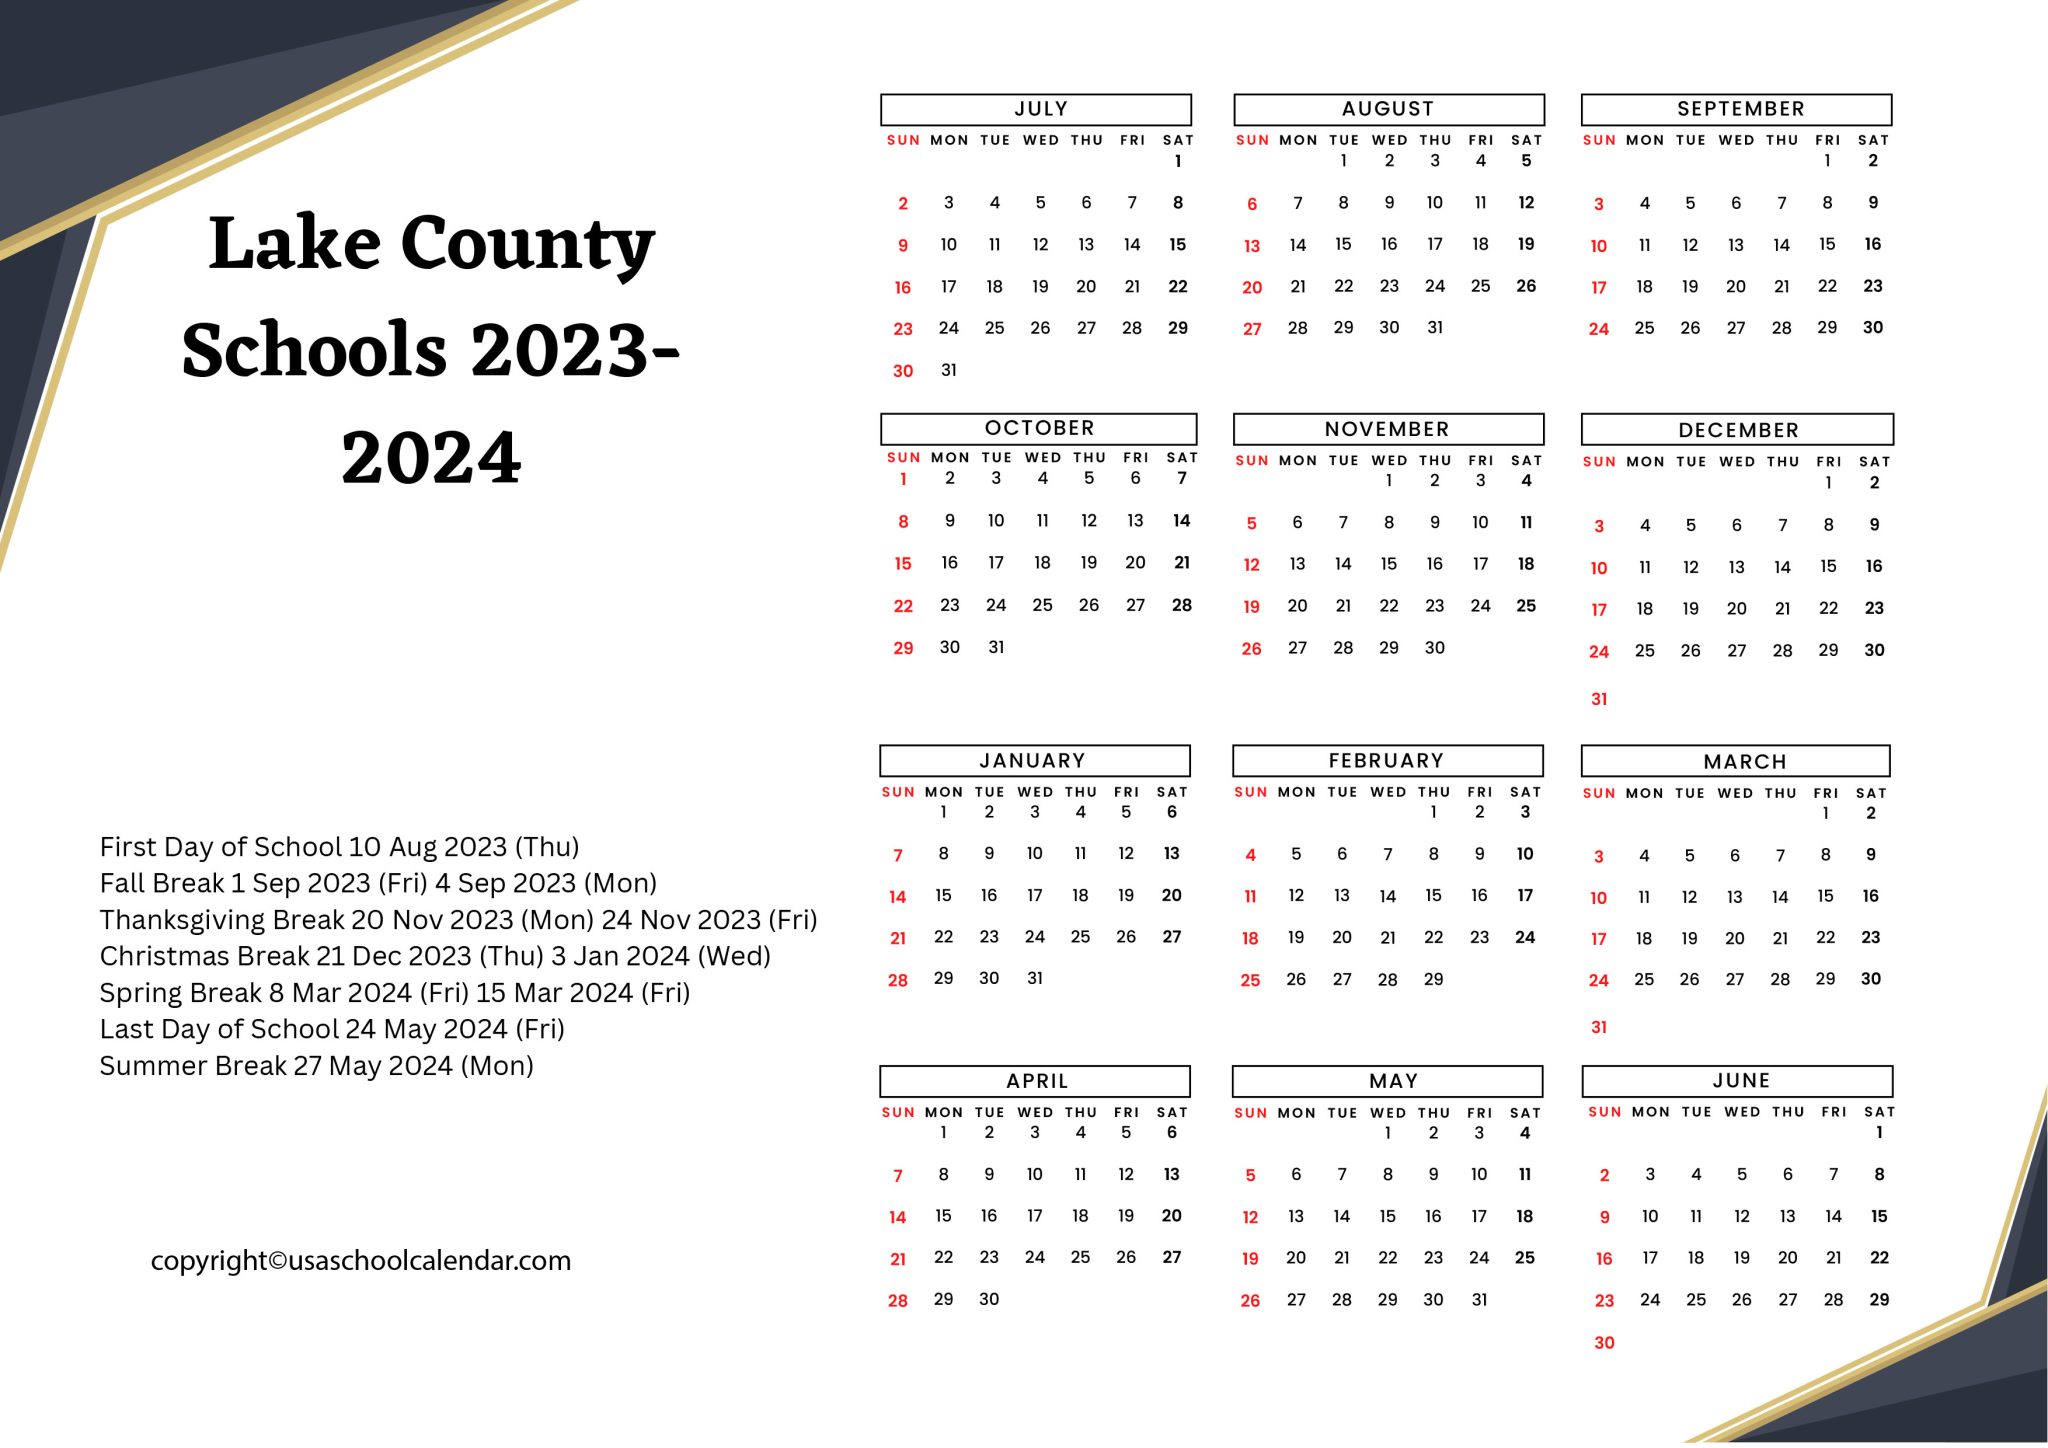 Lake County Schools Calendar 1 2048x1448 